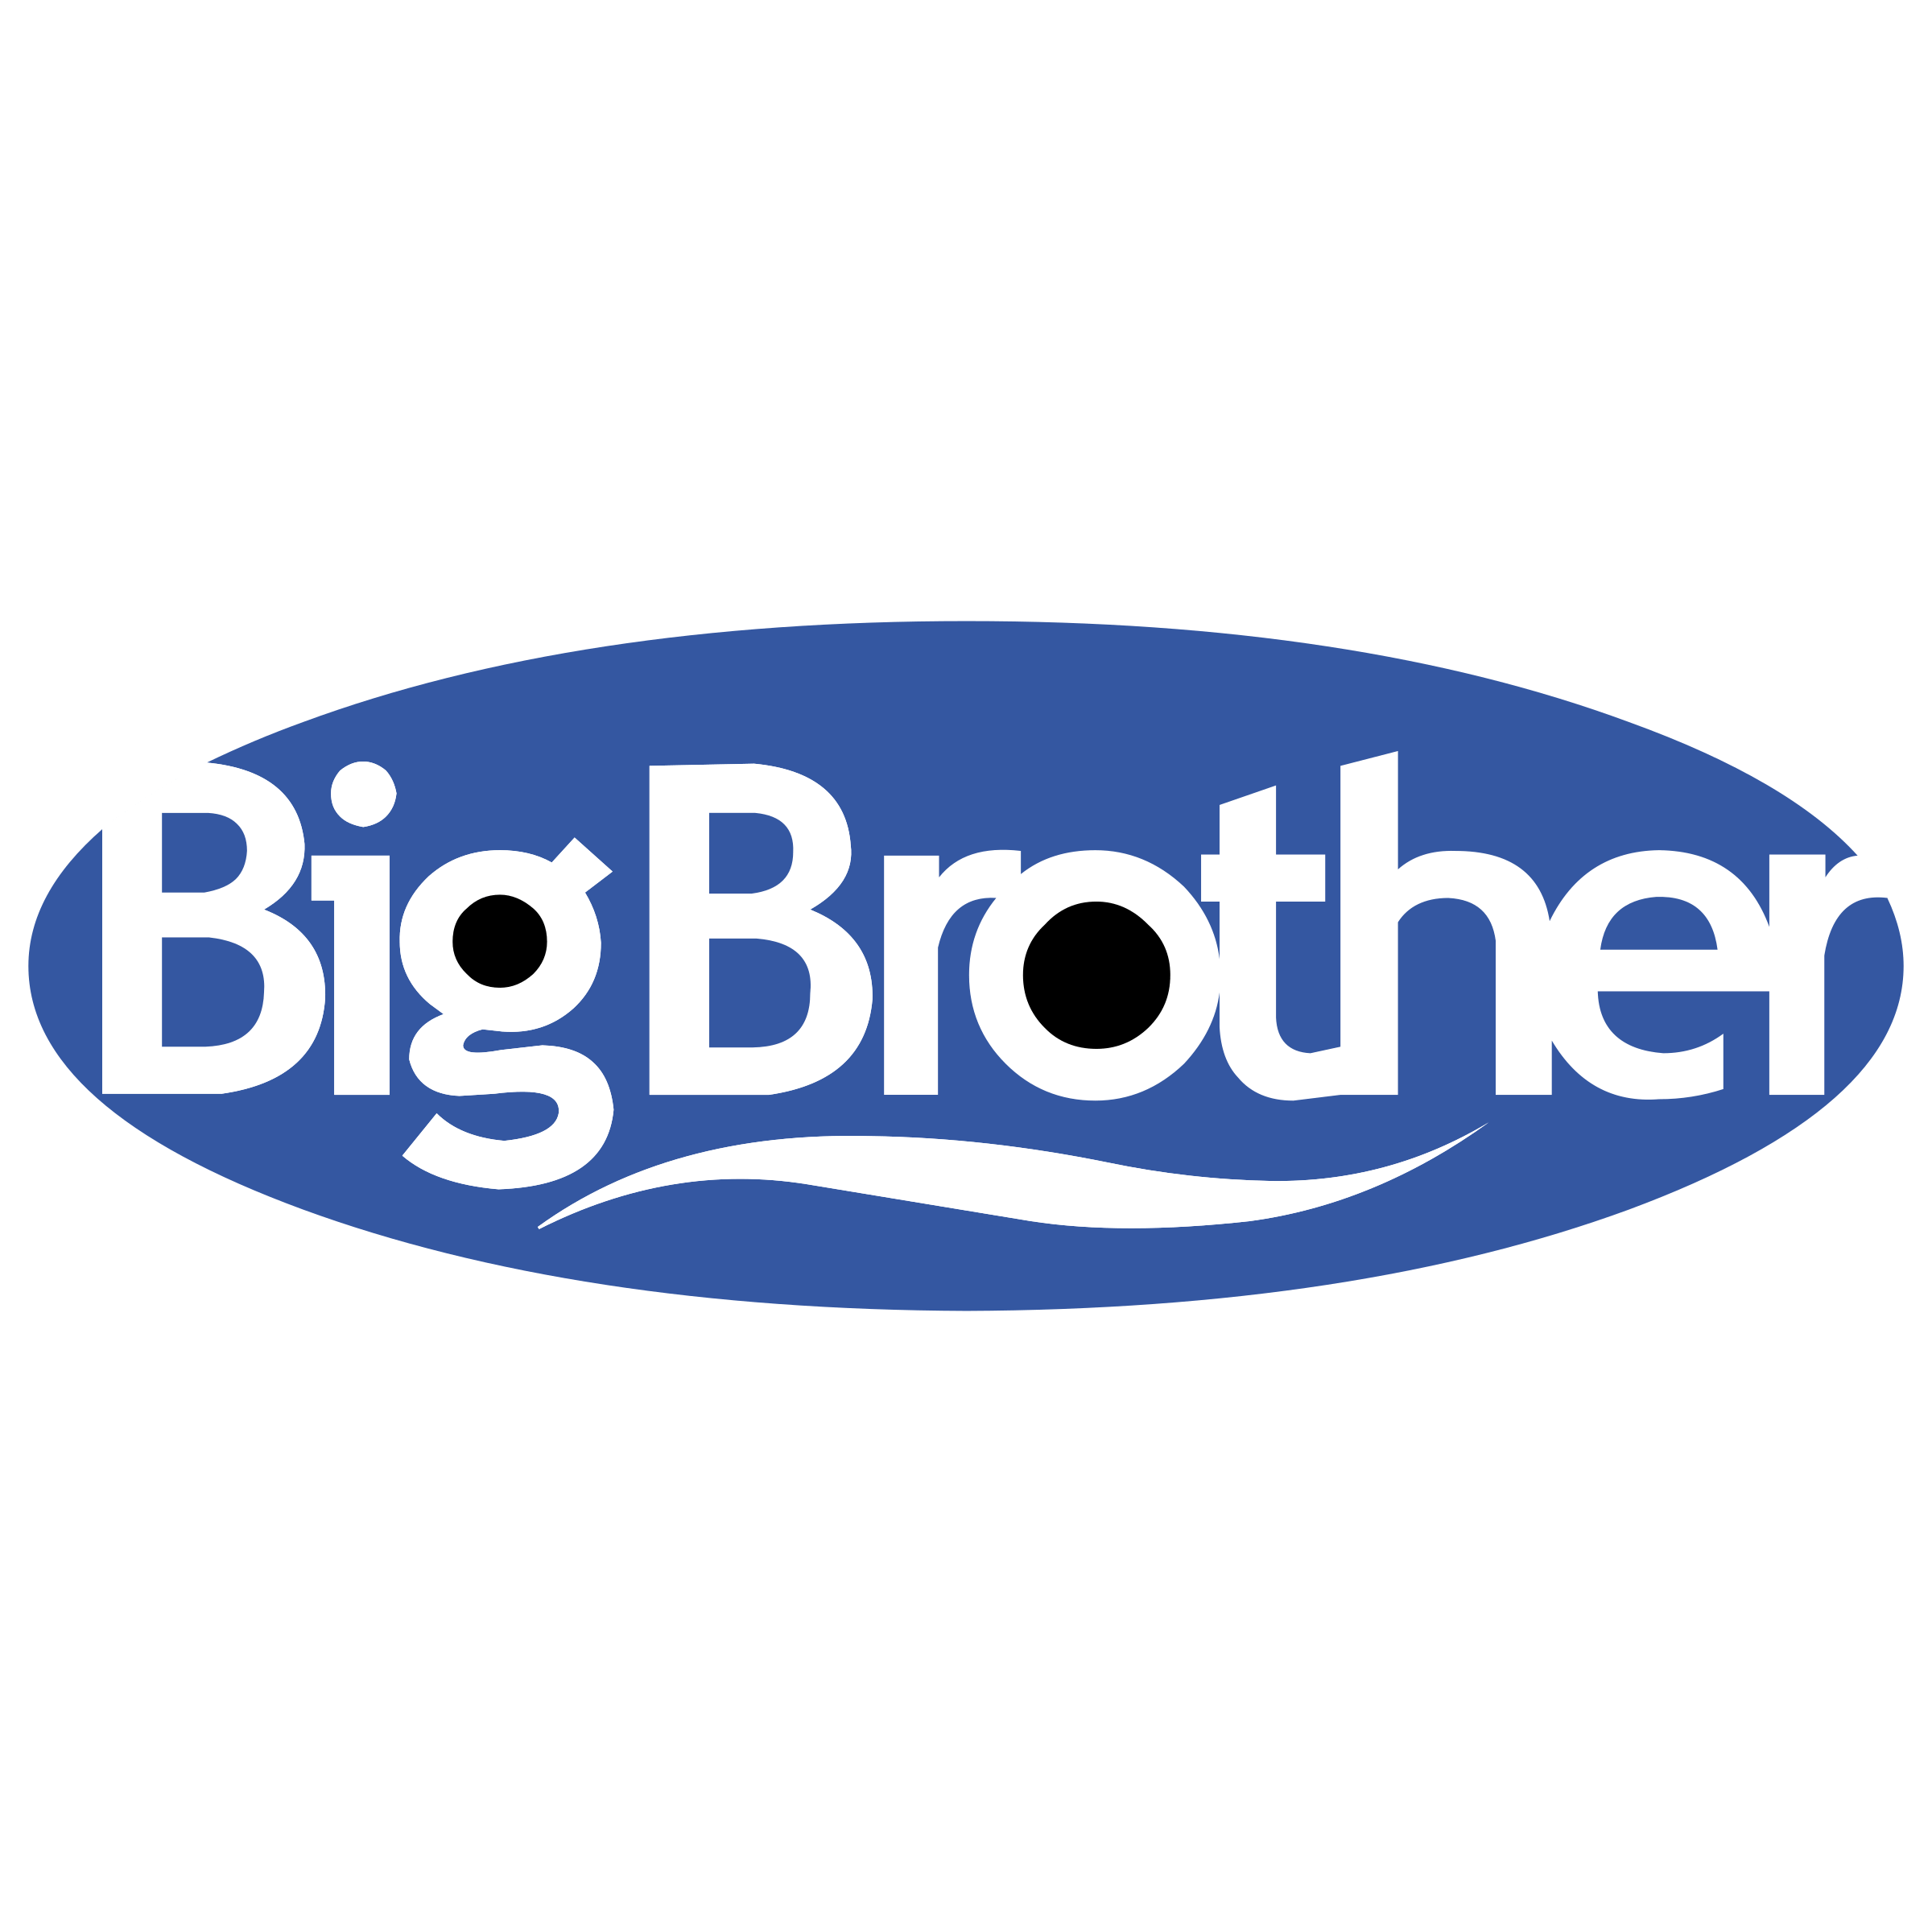 Brother Logo - Big Brother Logo PNG Transparent & SVG Vector